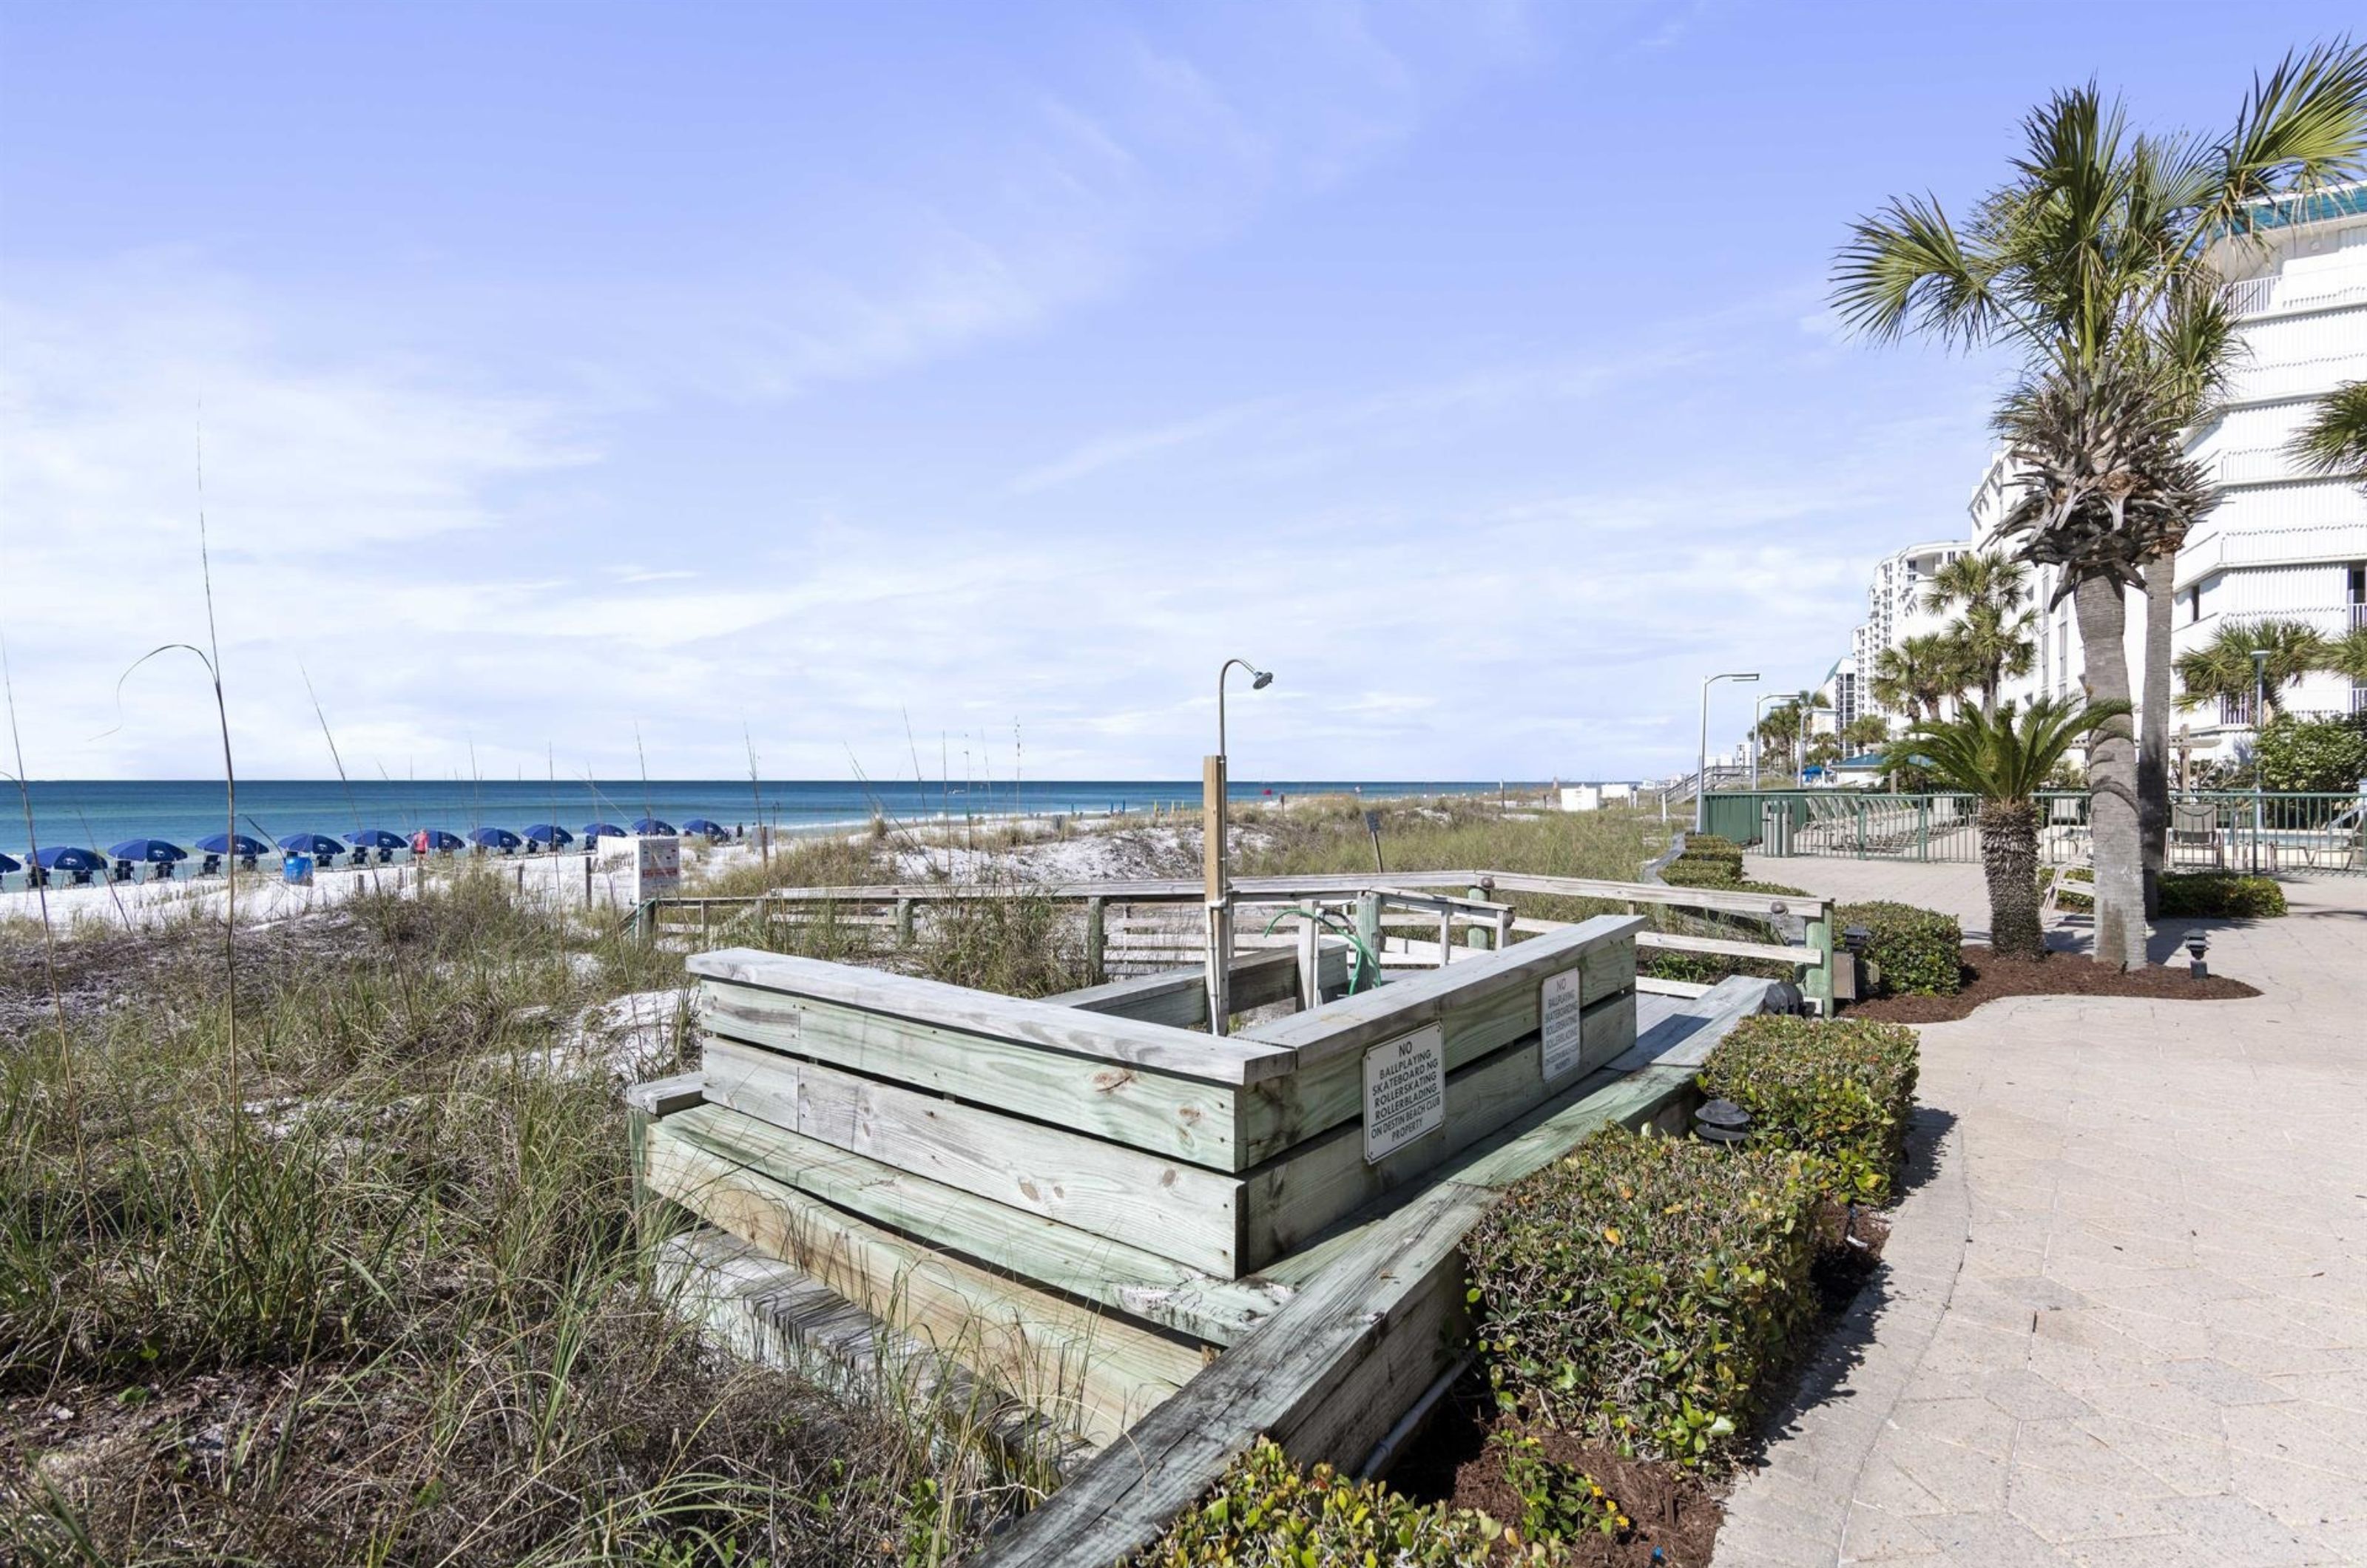 The outdoor showers on a wooden boardwalk atDestin Beach Club in Destin Florida 